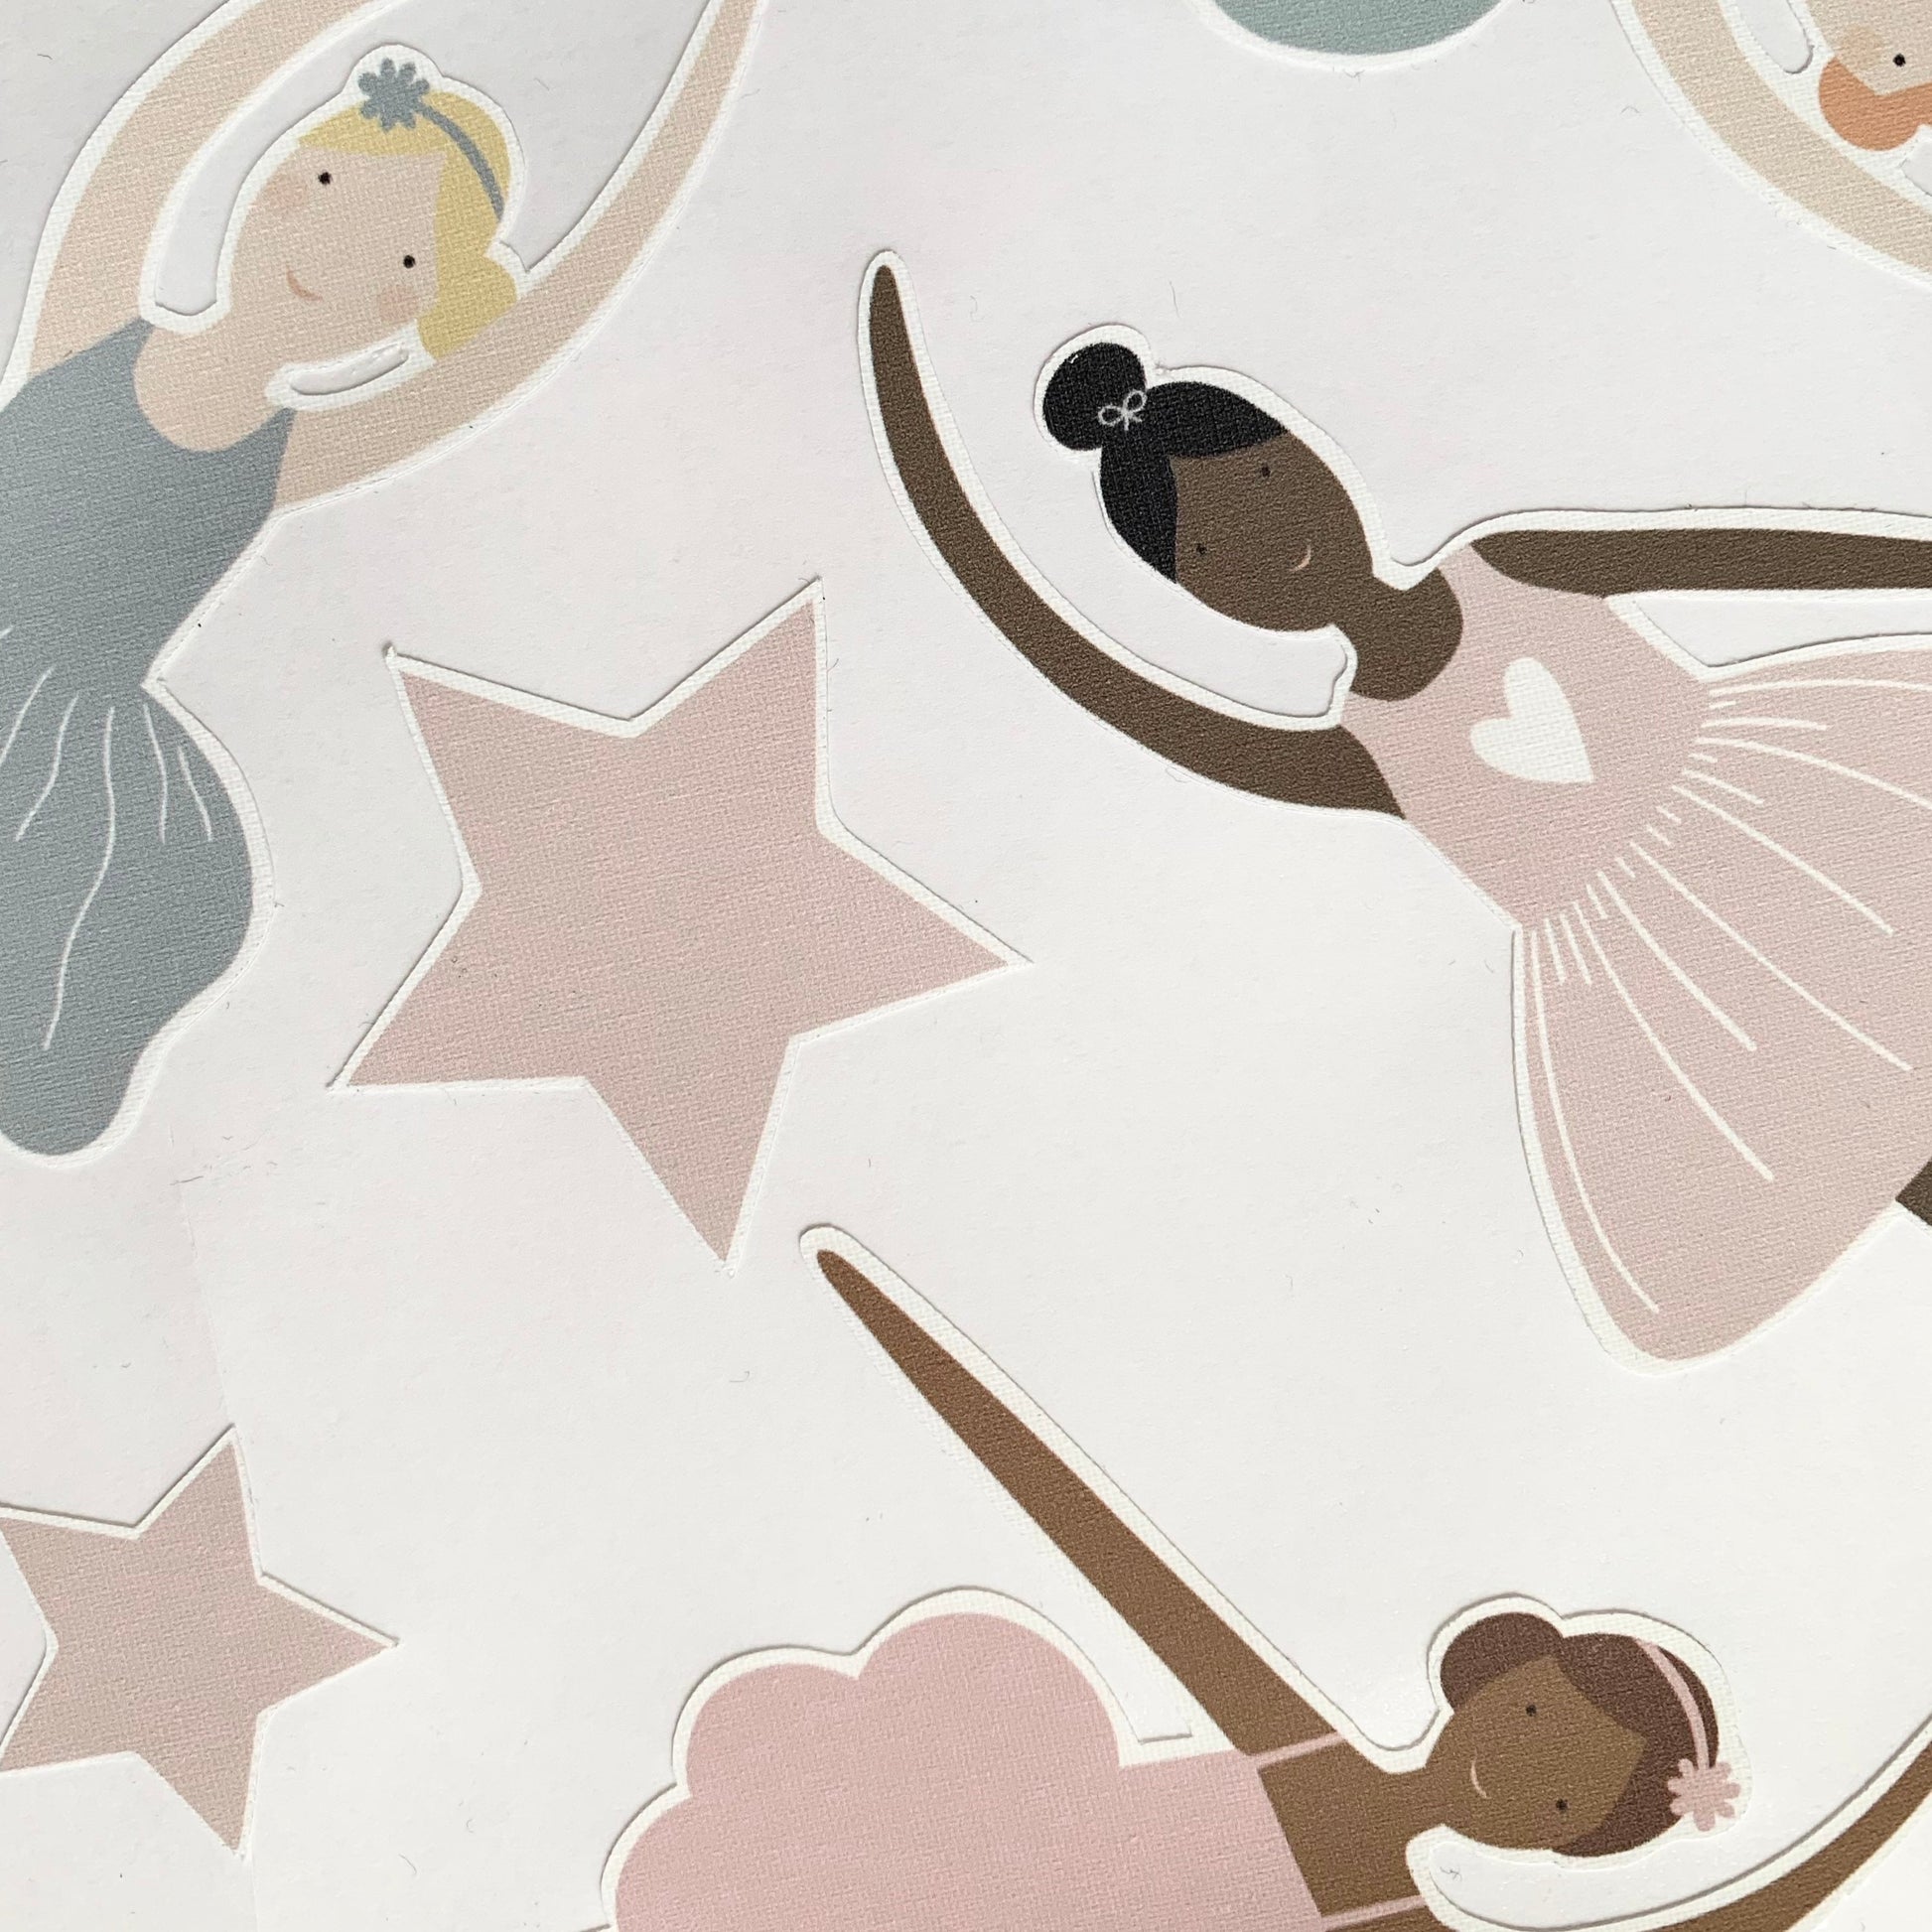 Ballerina Fabric Wall Stickers by The Little Jones